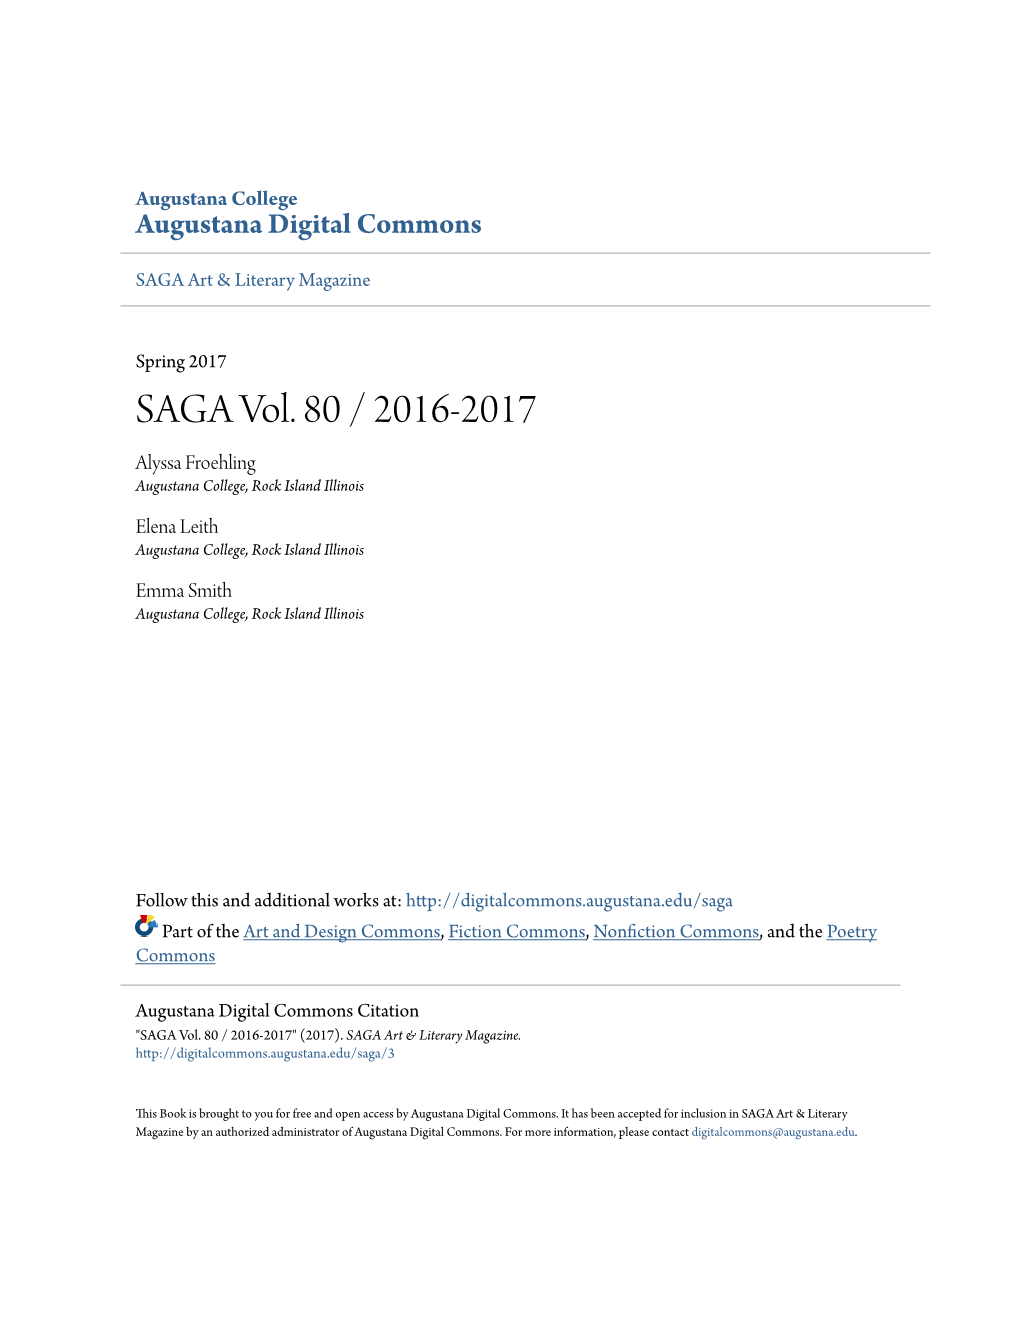 SAGA Vol. 80 / 2016-2017 Alyssa Froehling Augustana College, Rock Island Illinois